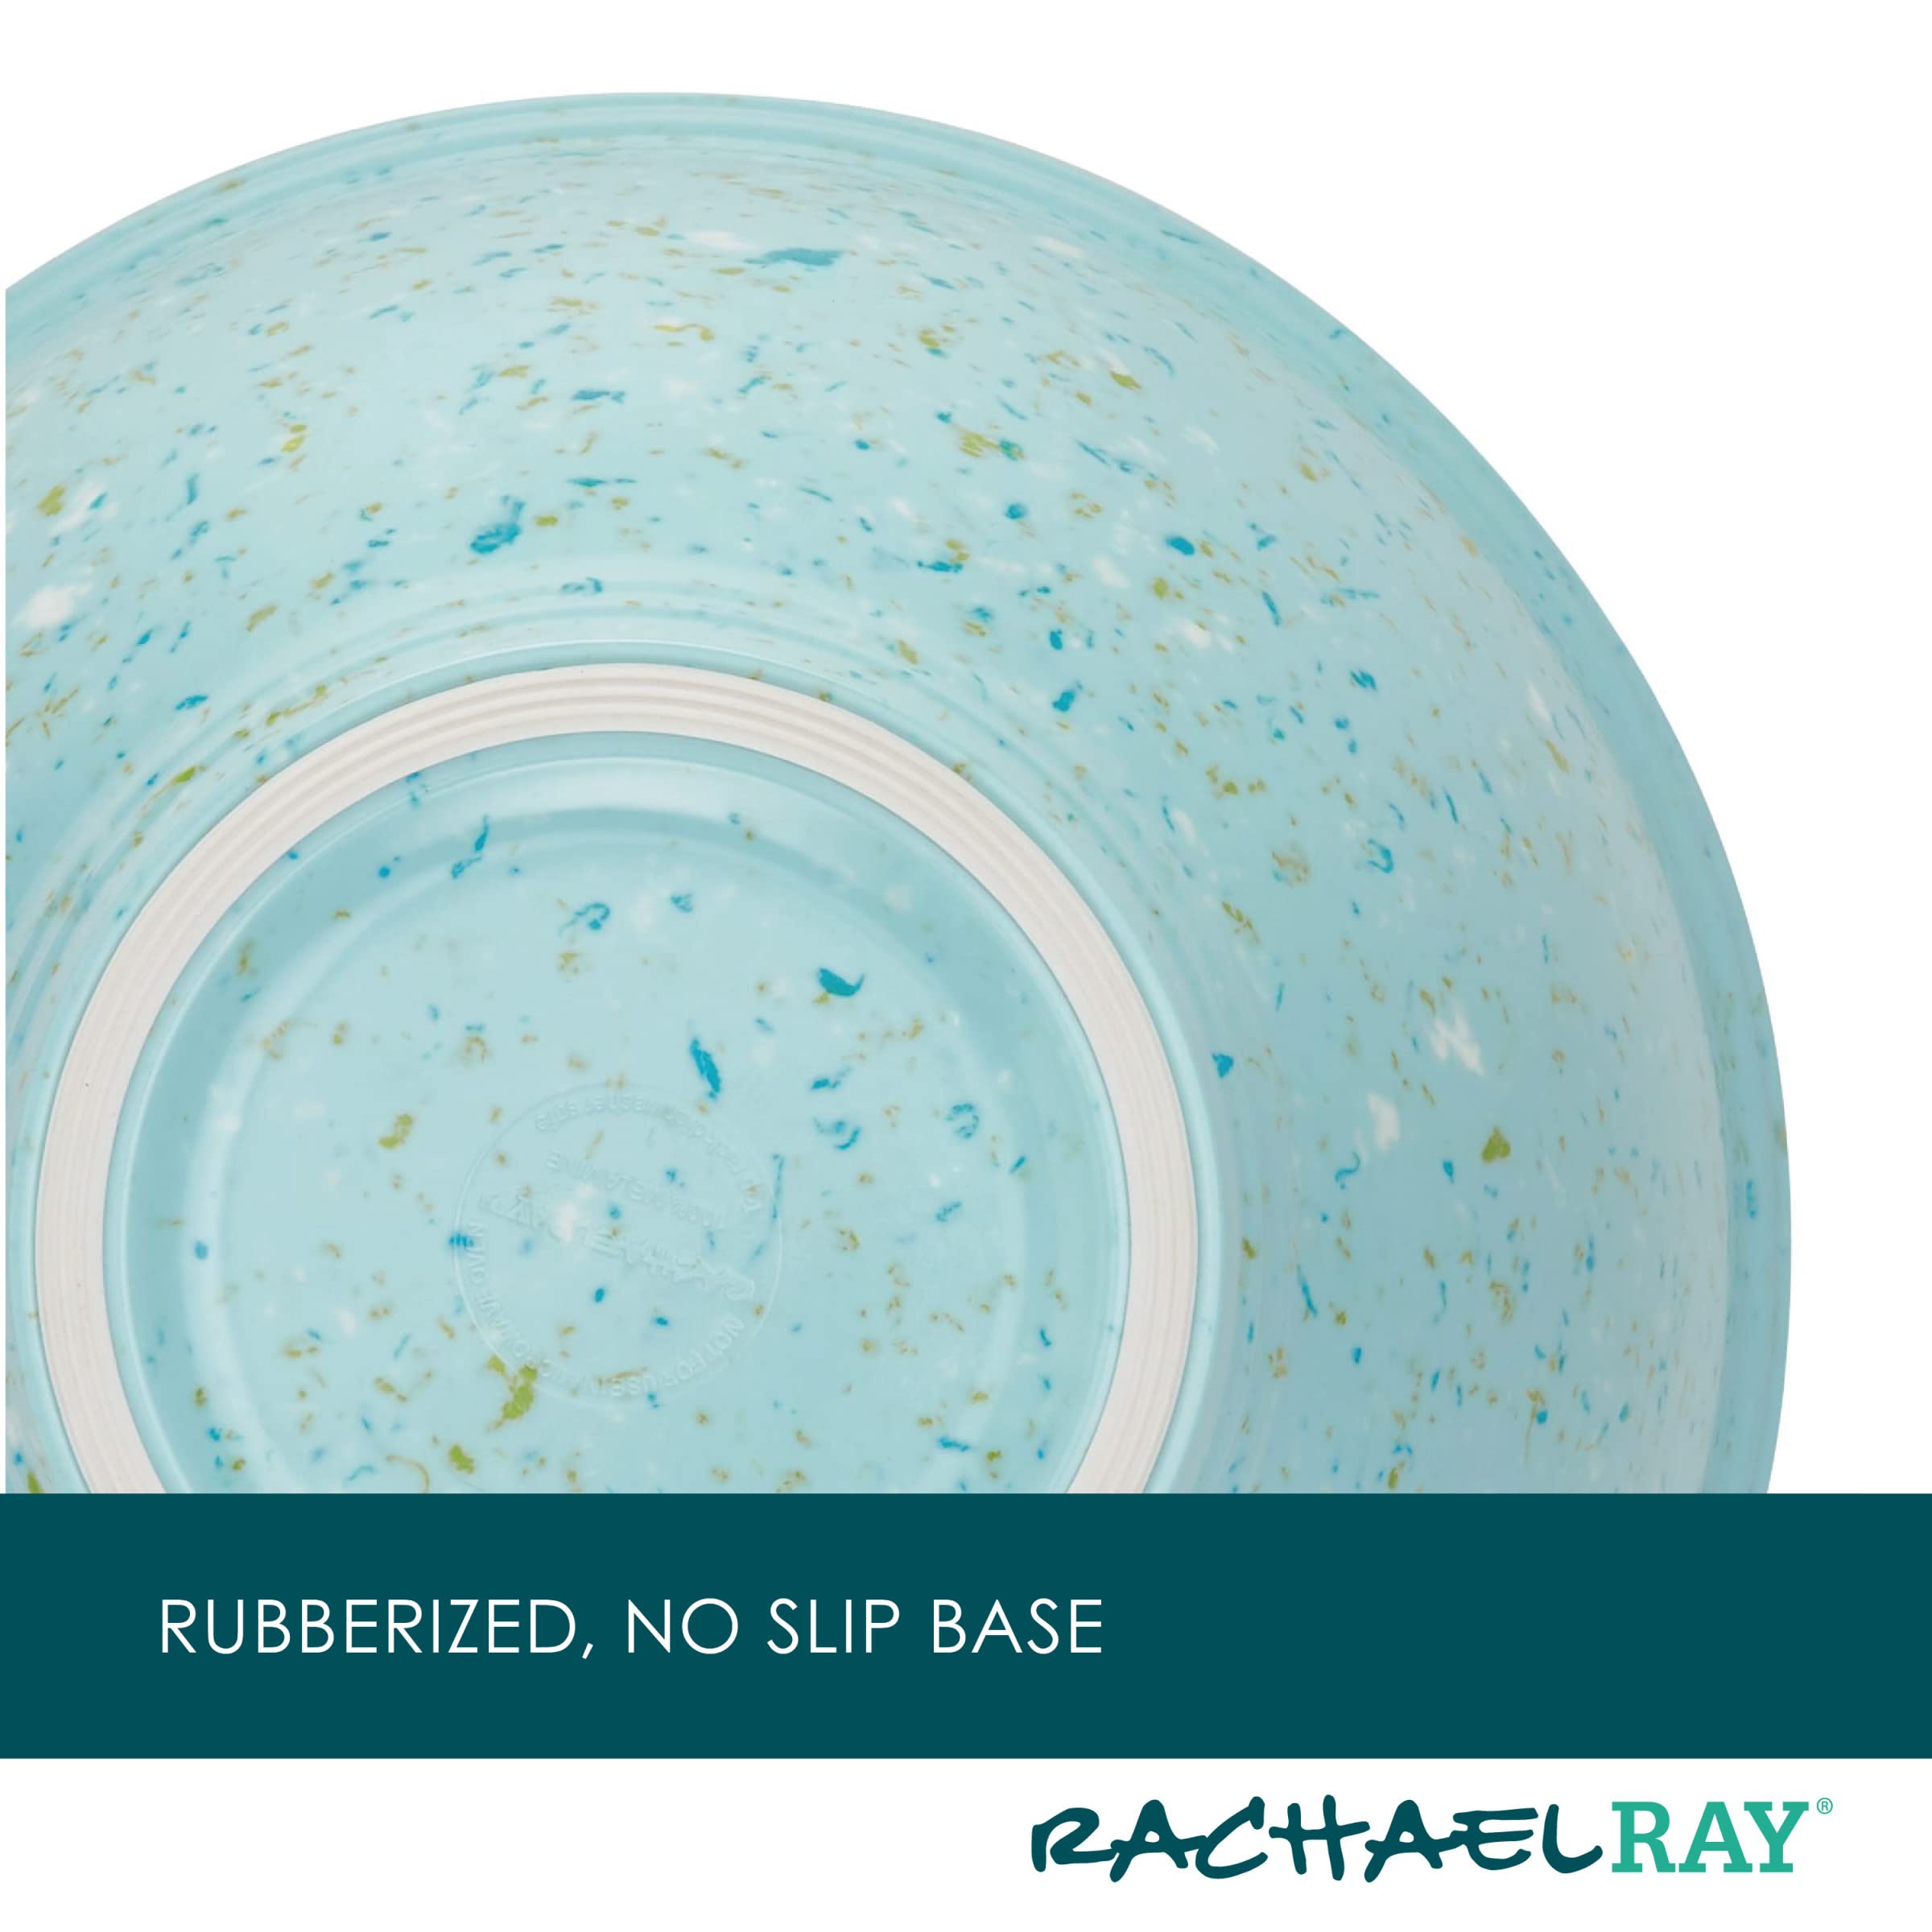 Rachael Ray Accessories Kitchen Pantryware Multi Purpose/Salad Serveware/Melamine Garbage Bowl, Agave Blue,1 gallon